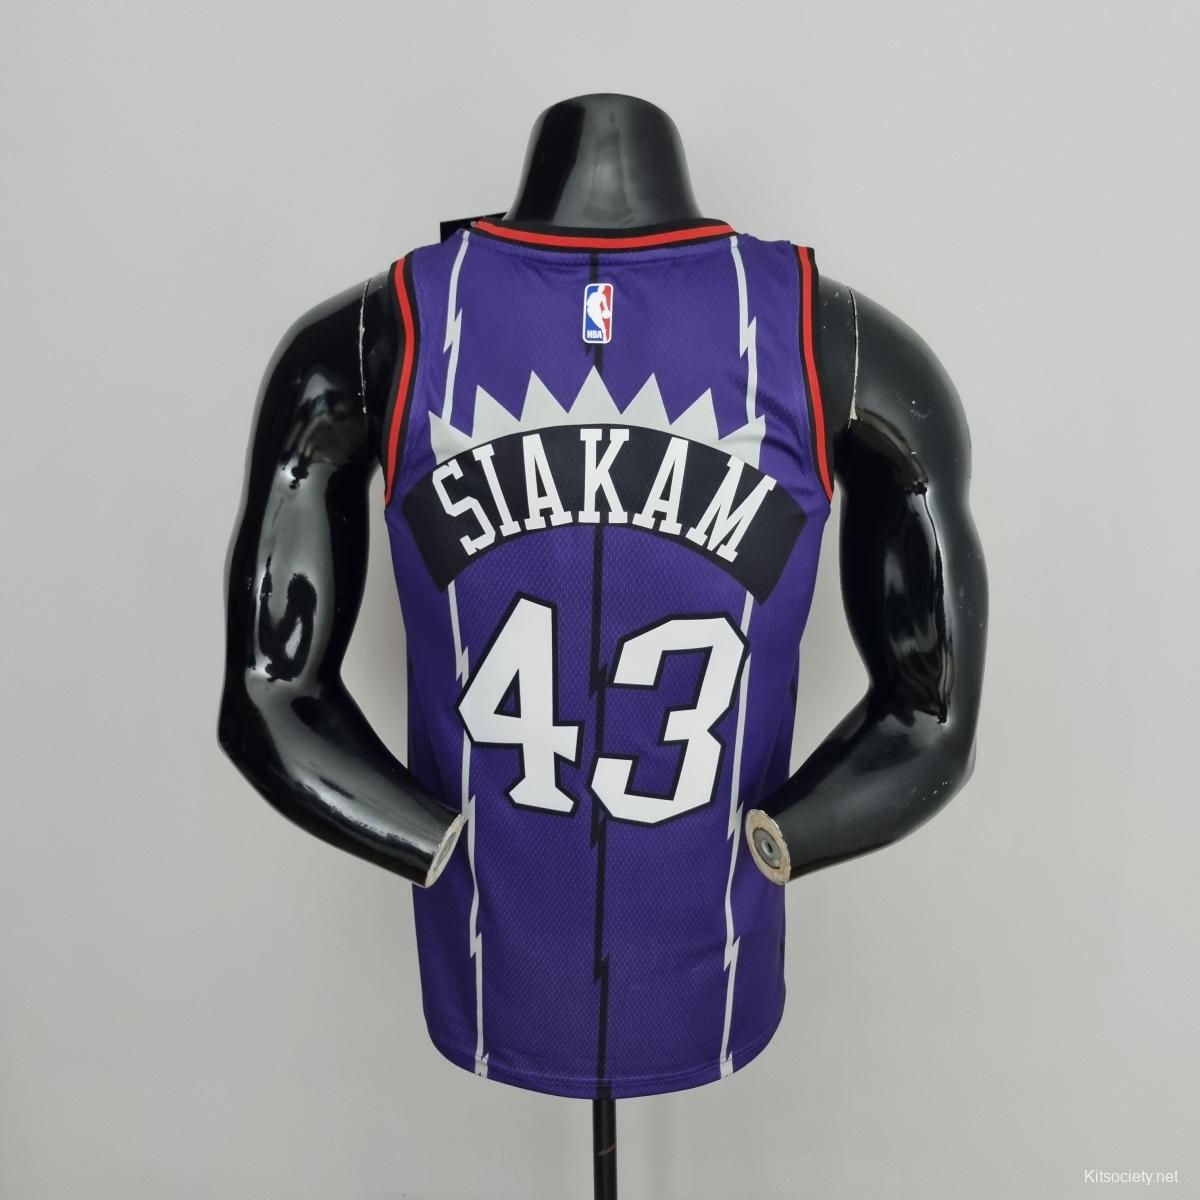 Toronto Raptors SIAKAM #43 Purple NBA Jersey - Kitsociety